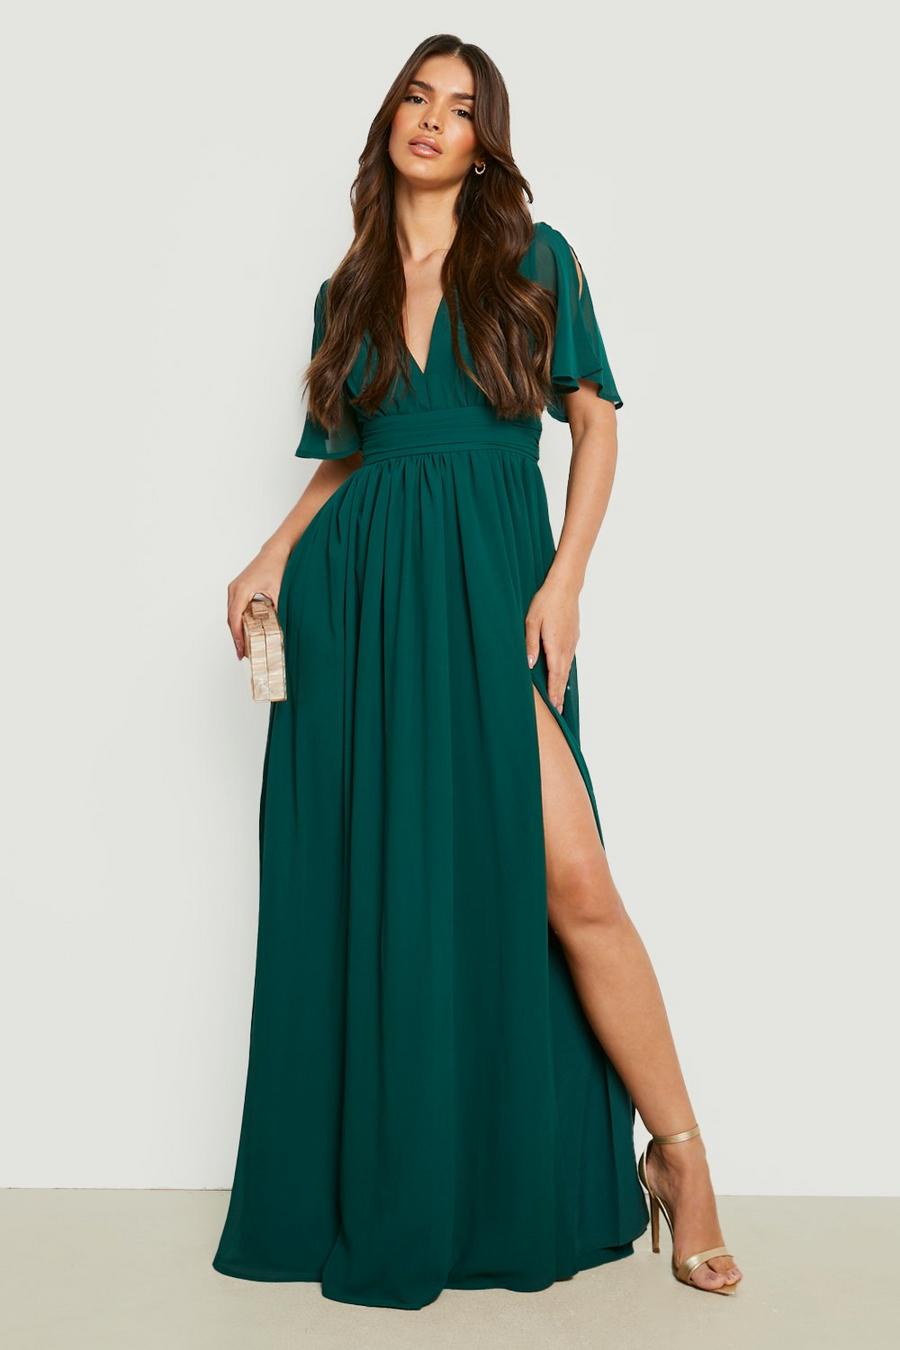 Emerald green Chiffon Plunge Rouched Maxi Dress